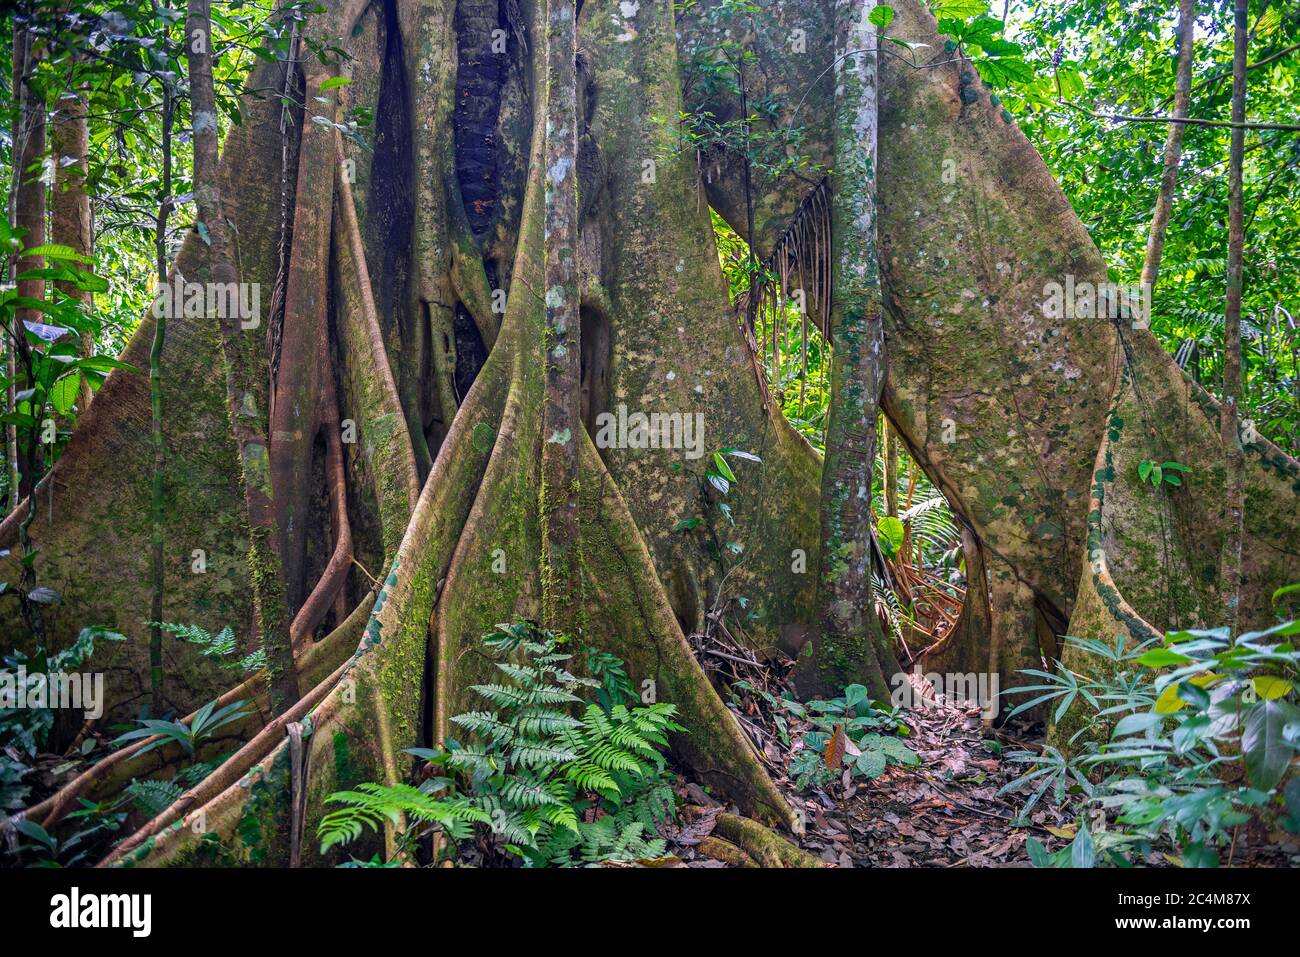 Base of a ceiba tree trunk (Ceiba pentandra) in the Amazon rainforest, Yasuni national park, Ecuador. Unsharp foreground plants, sharp tree. Stock Photo